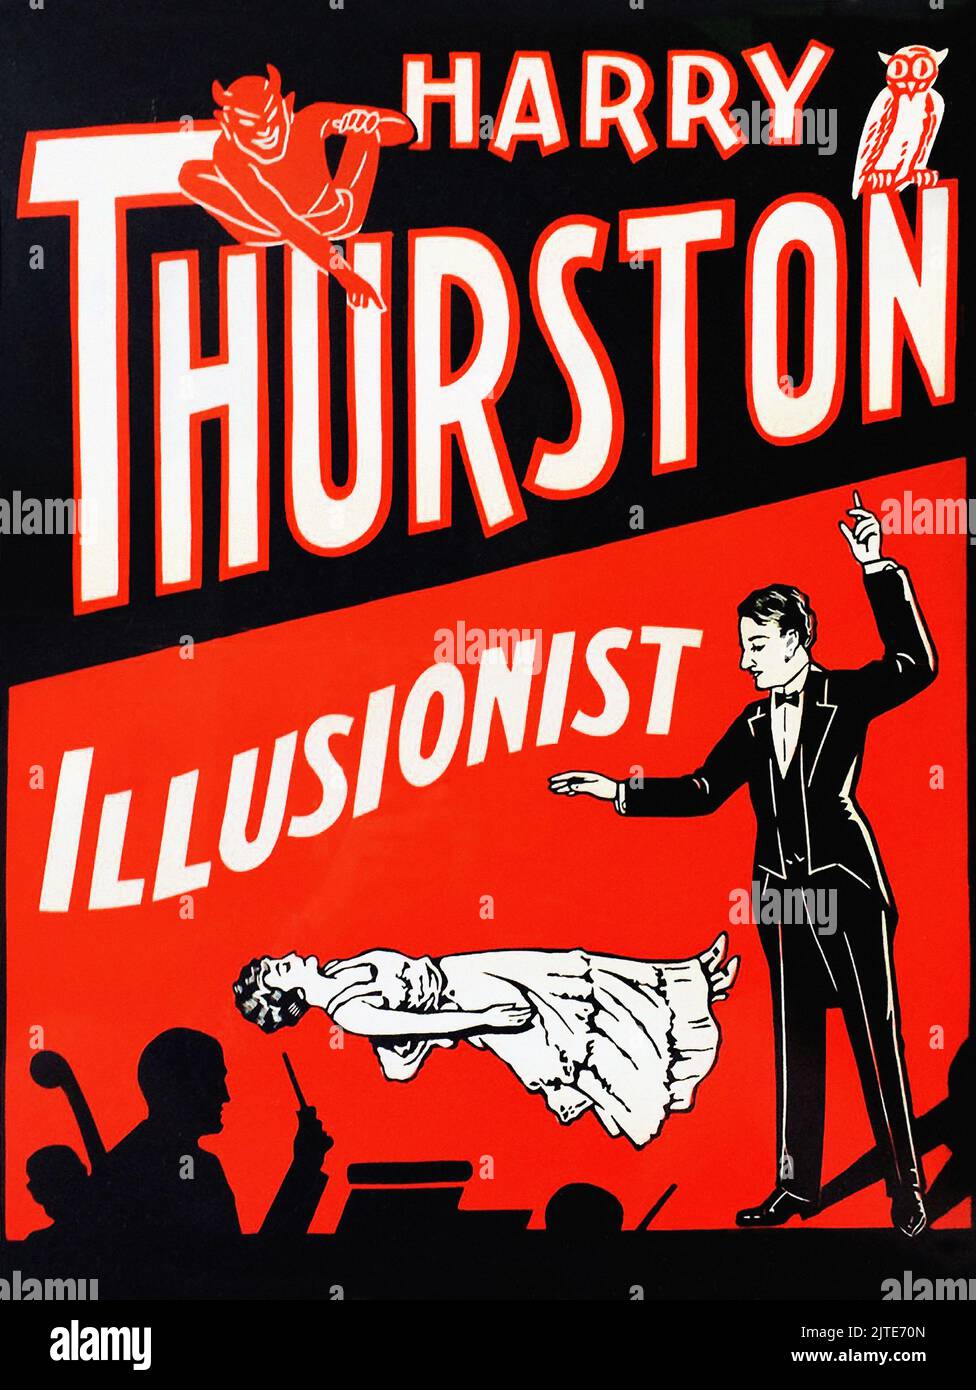 Poster Magico vintage 1920s - Harry Thurston Illusionist Foto Stock